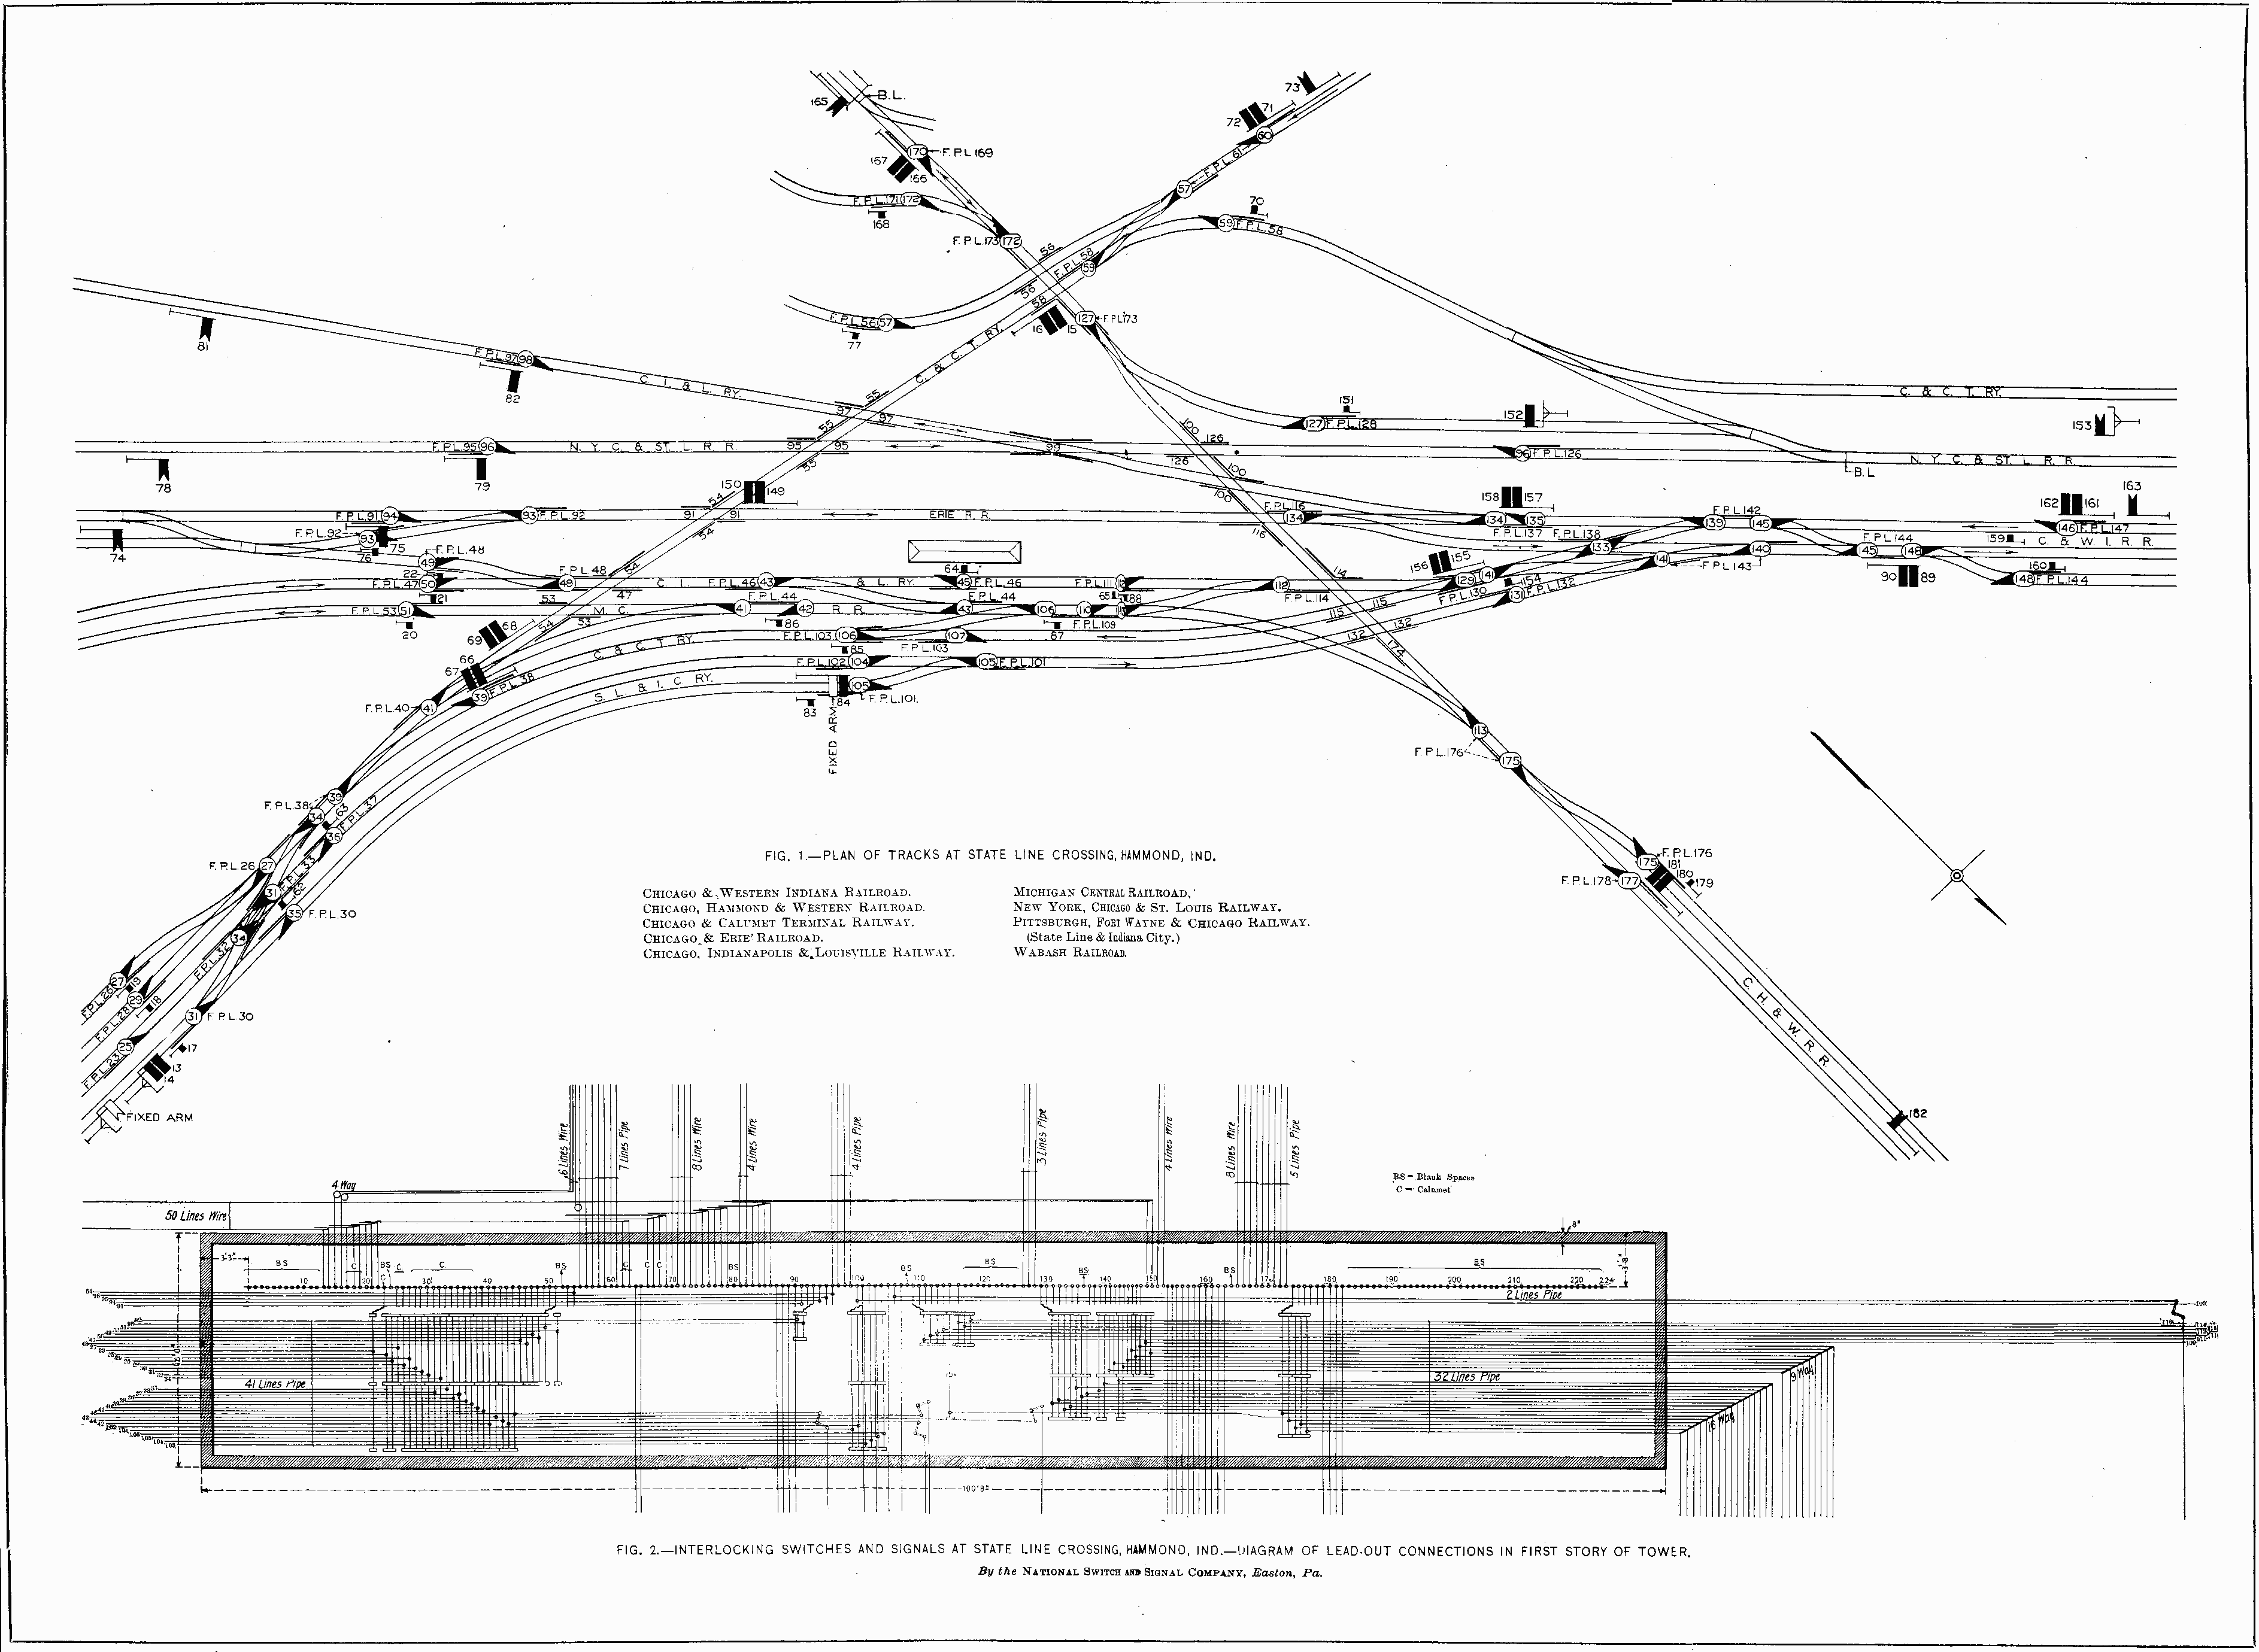 Railway Track Diagrams